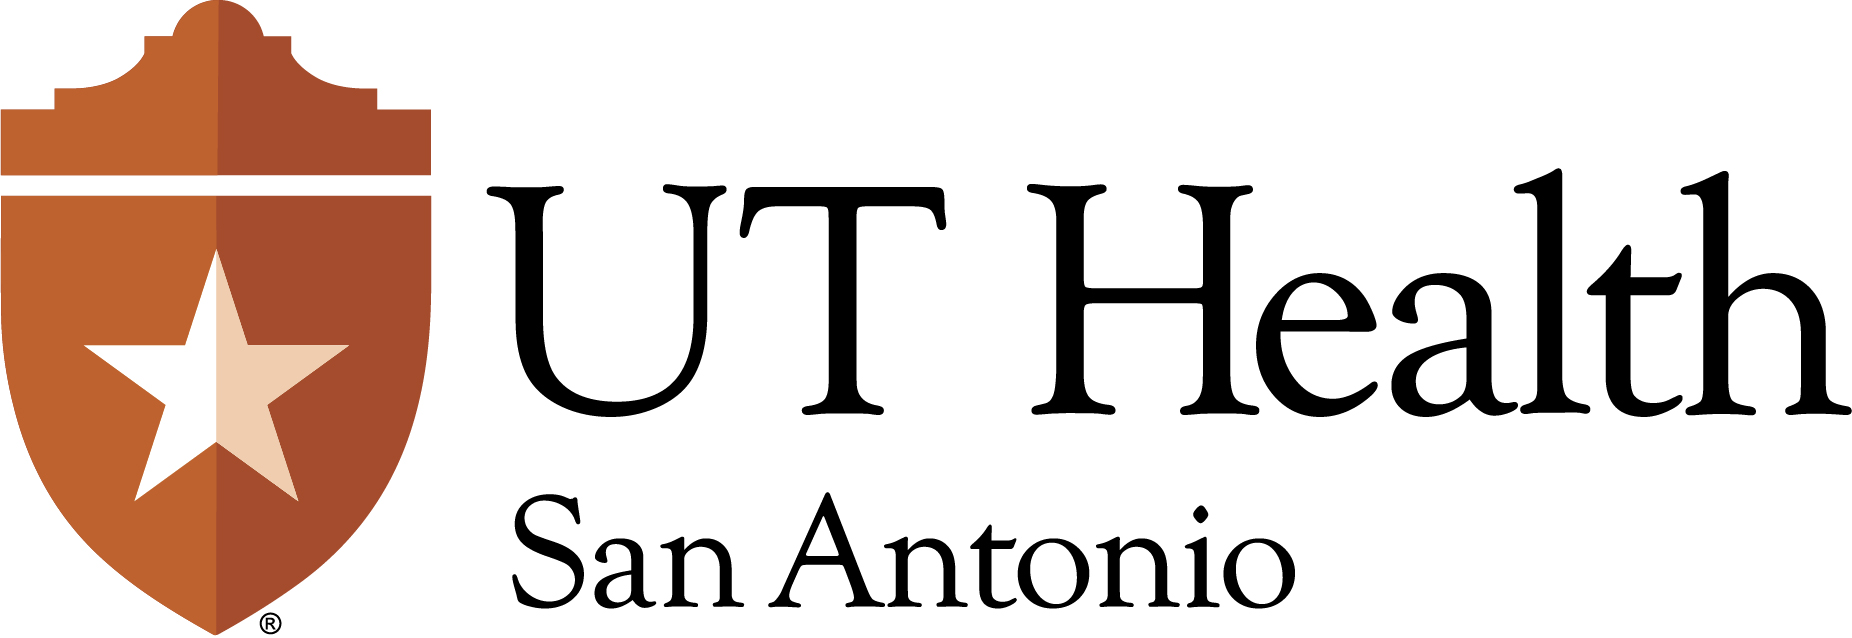 University Texas_logo.jpg